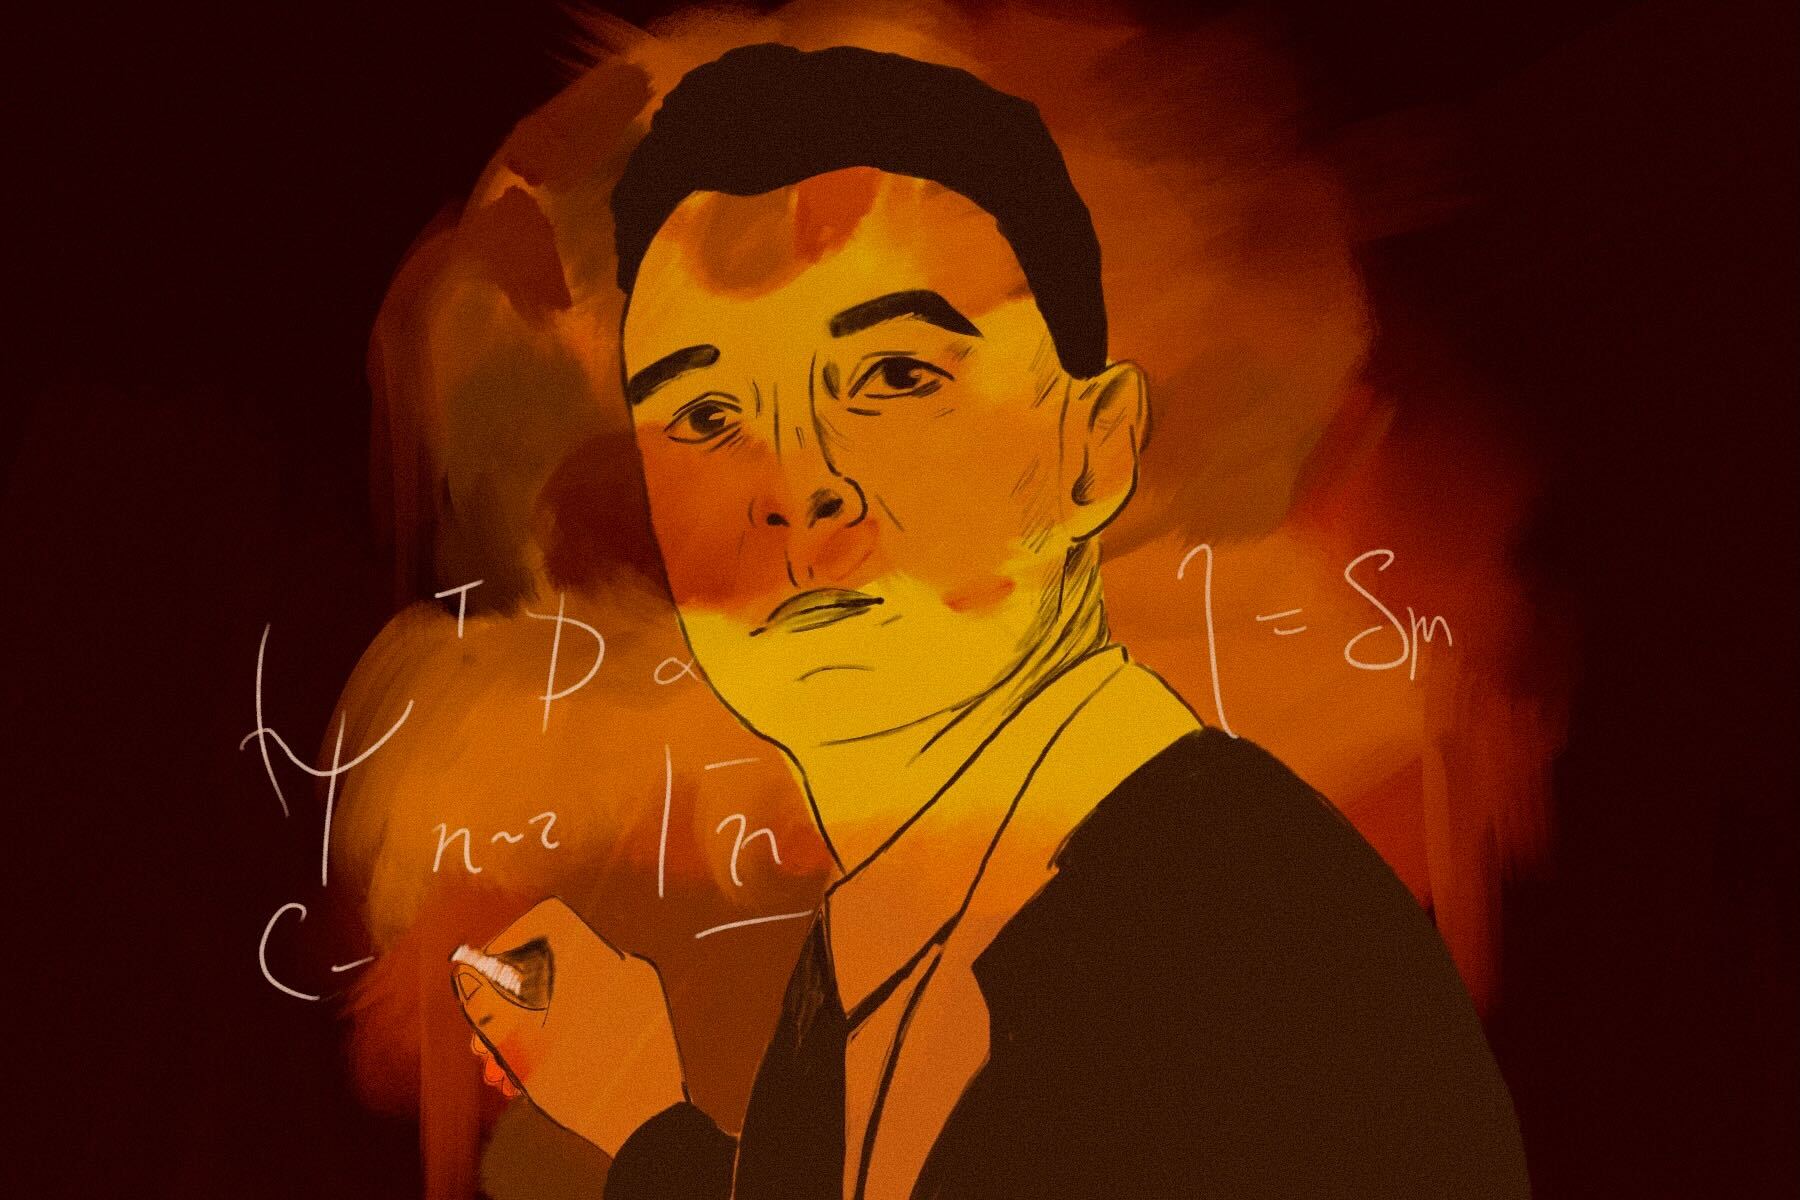 An illustration of J. Robert Oppenheimer writing on a chalkboard